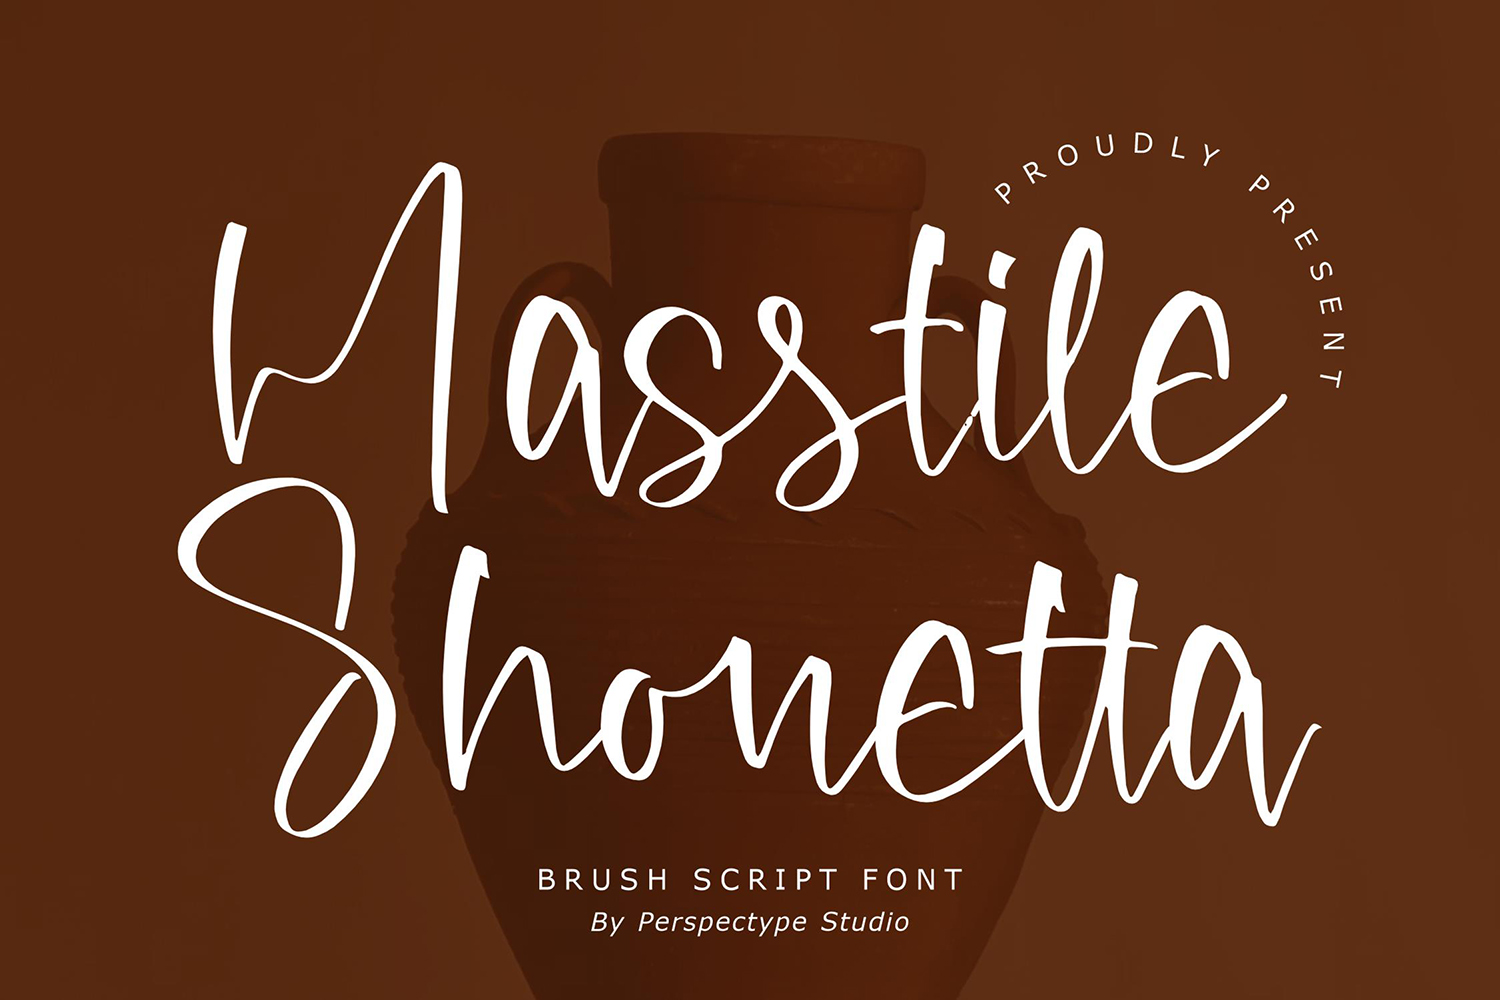 Masstile Shonetta Free Font